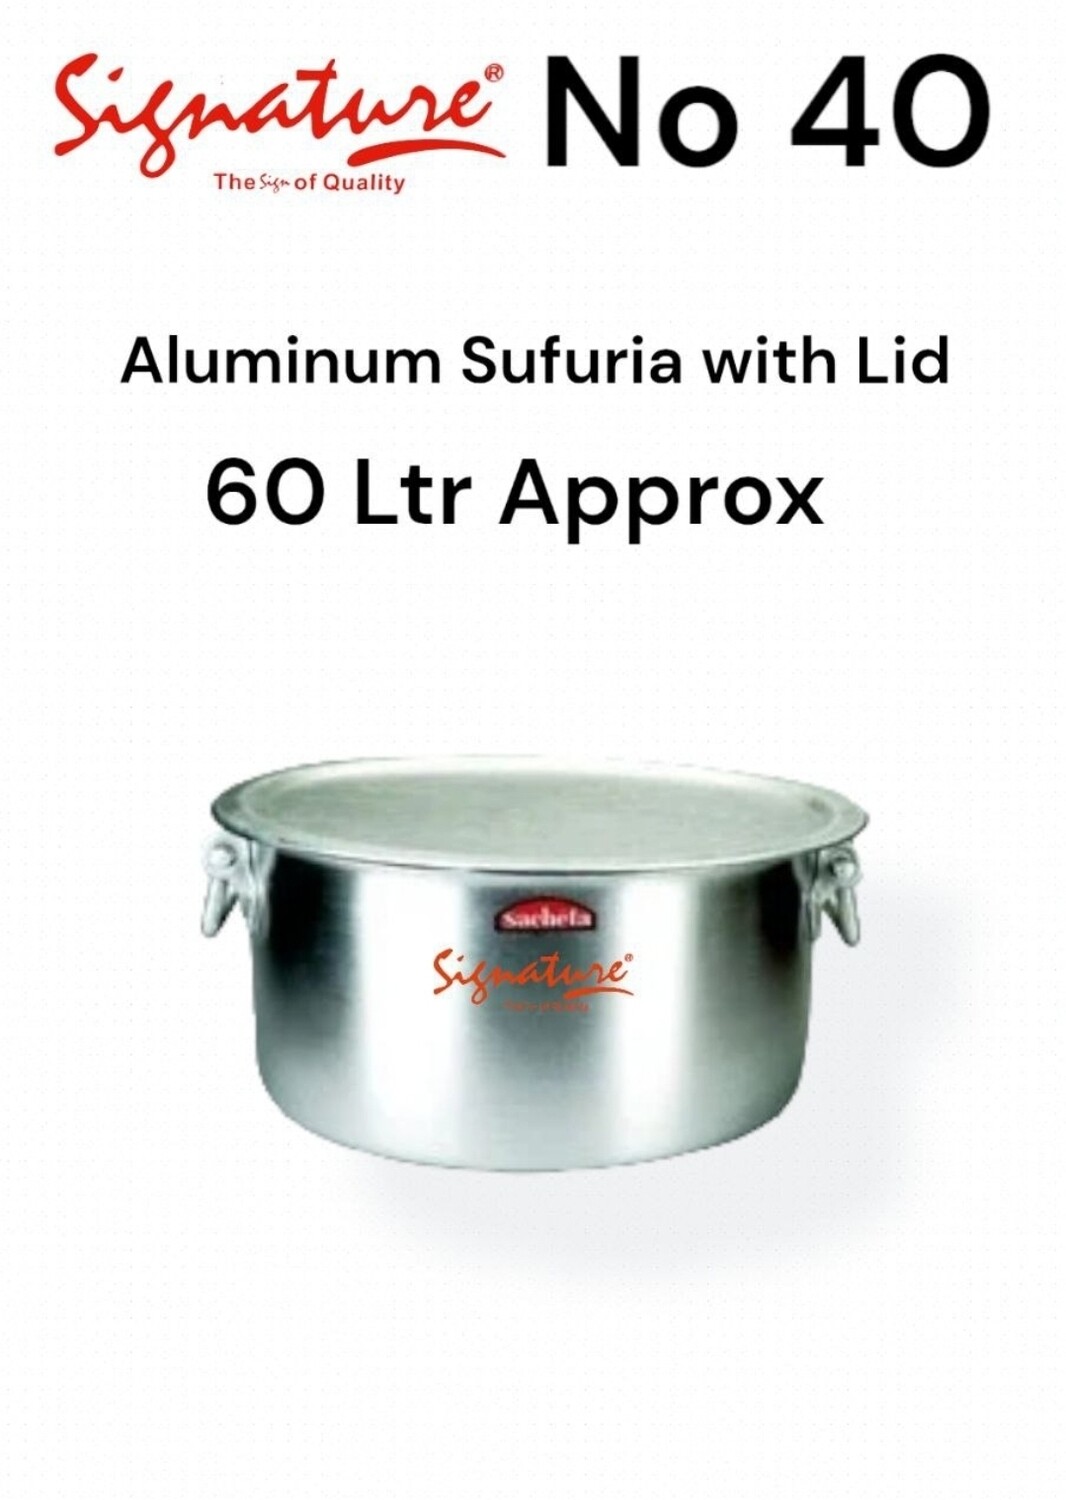 Signature heavy duty aluminium sufuria with lid 60Litres